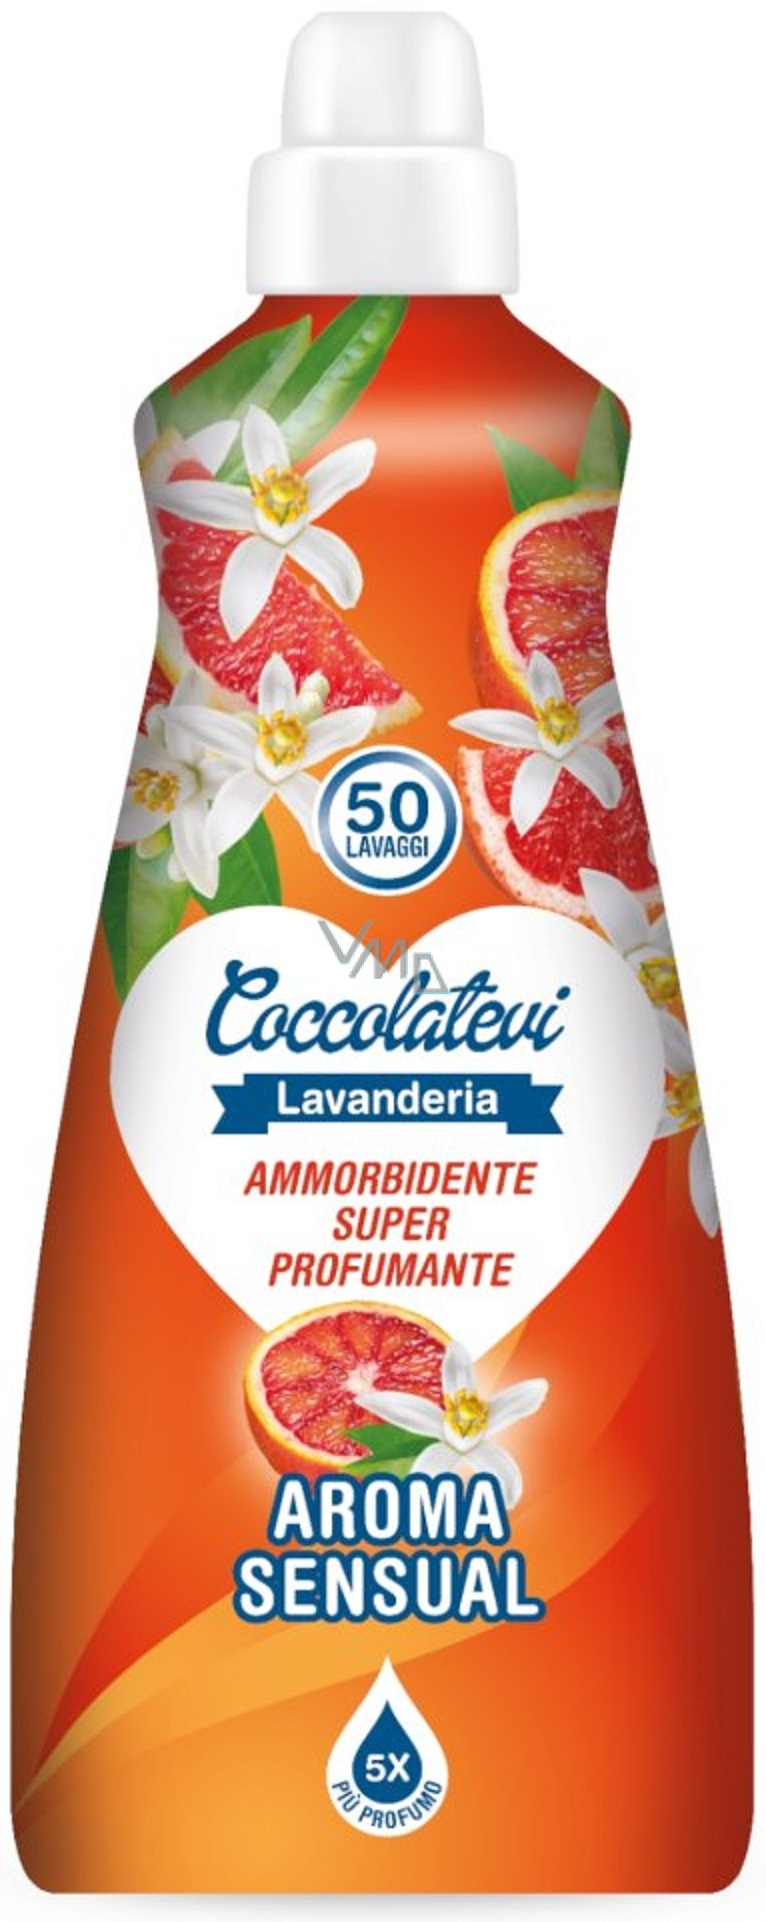 Coccolatevi Aroma Sensual fabric softener 50 doses 1250 ml - VMD